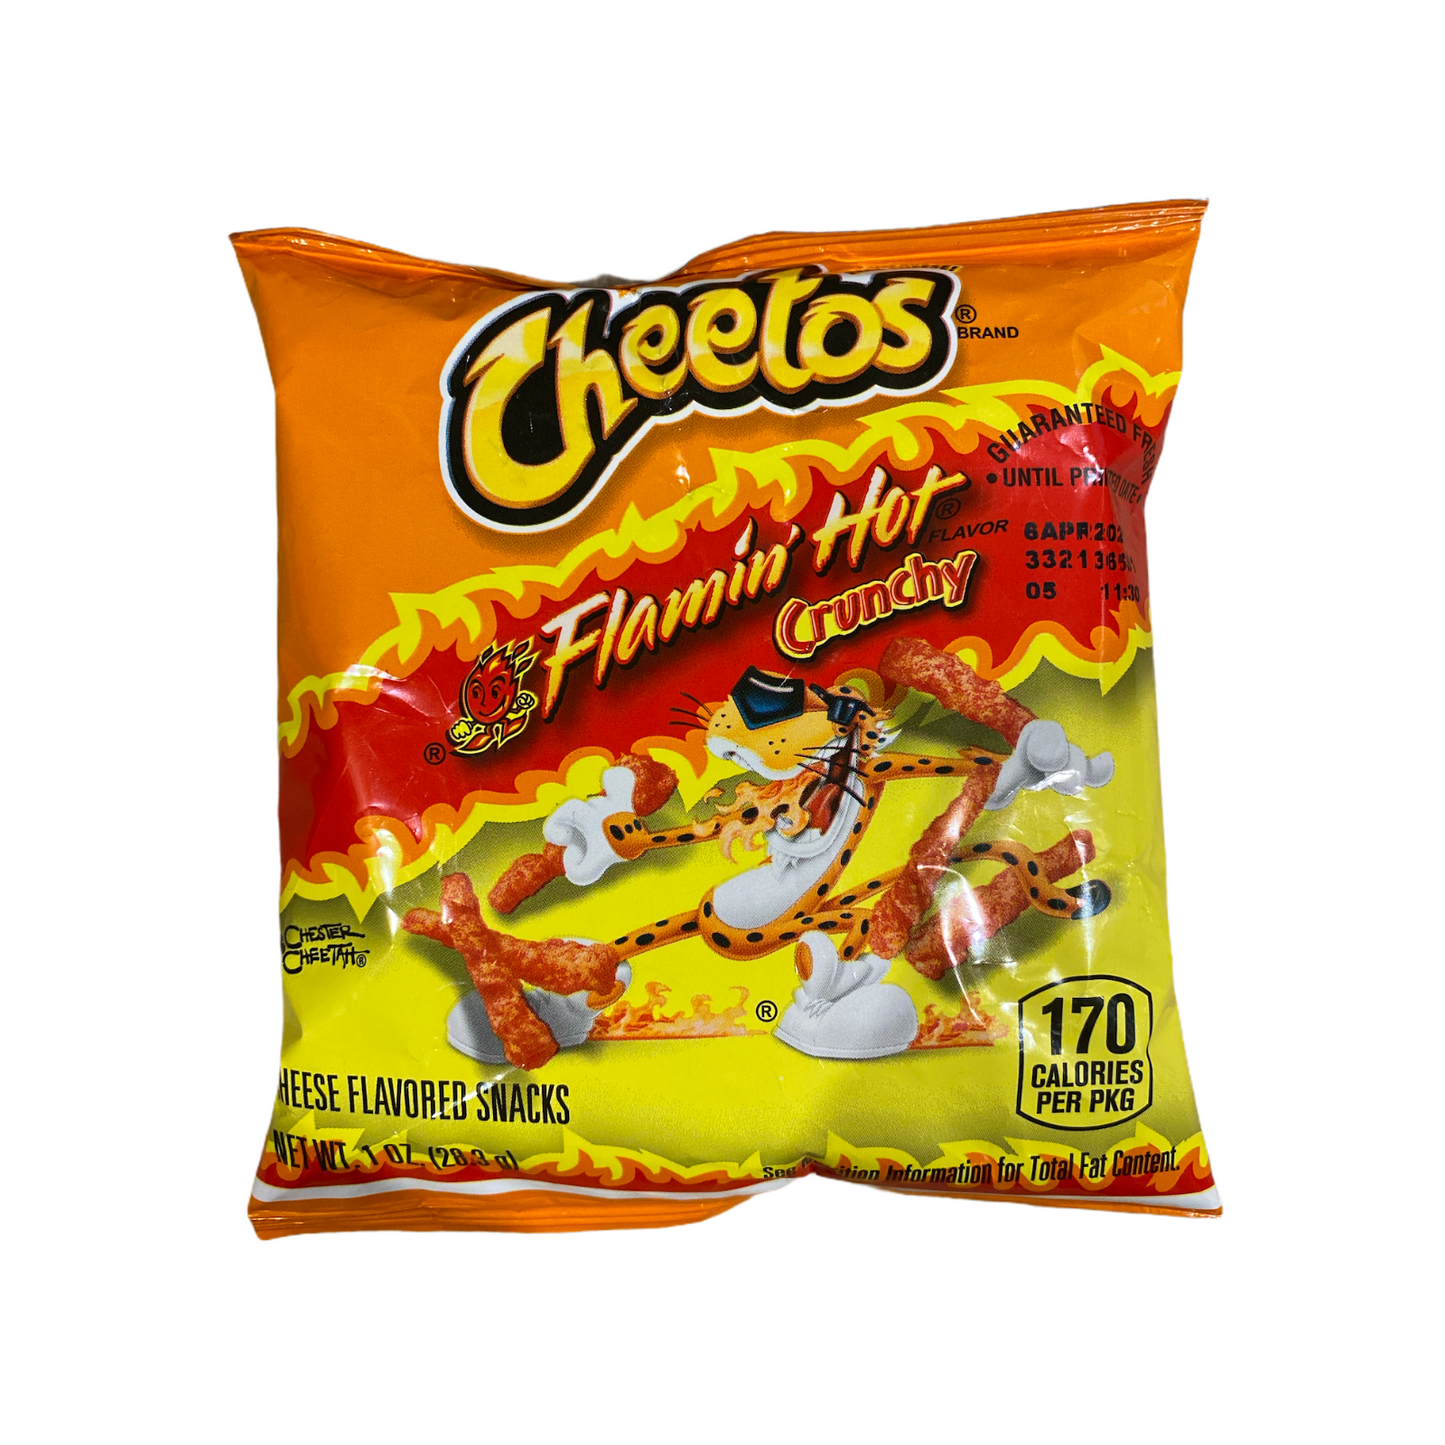 Cheetos Crunchy Flamin Hot - 1oz (28.3g)